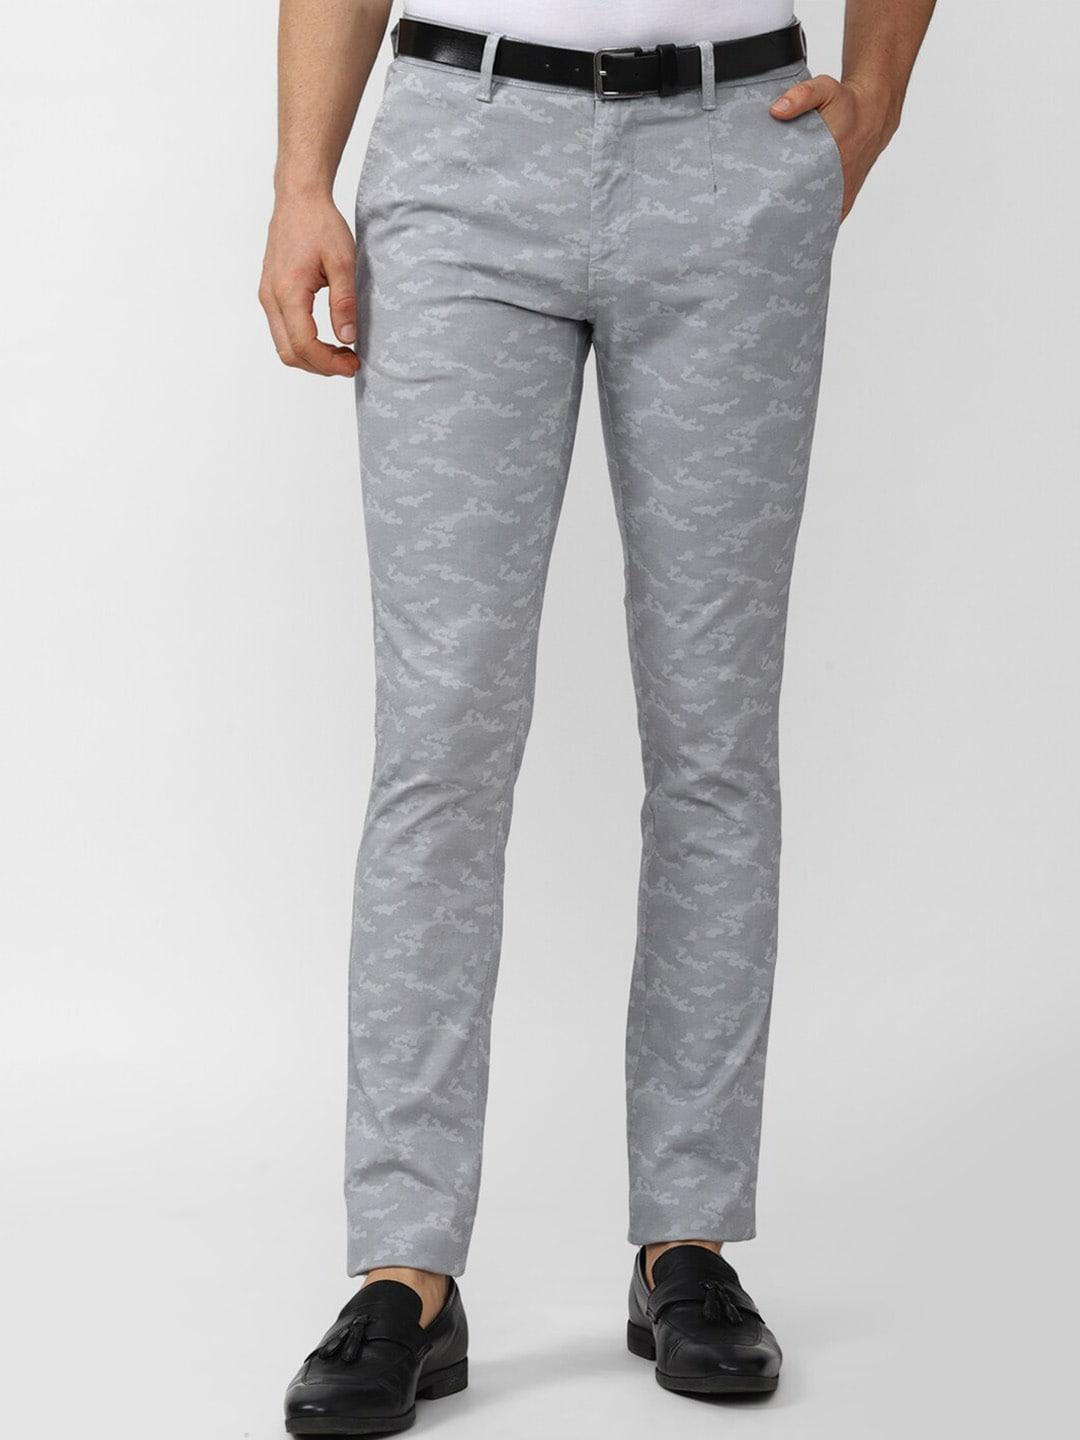 v dot men grey printed slim fit chinos trousers